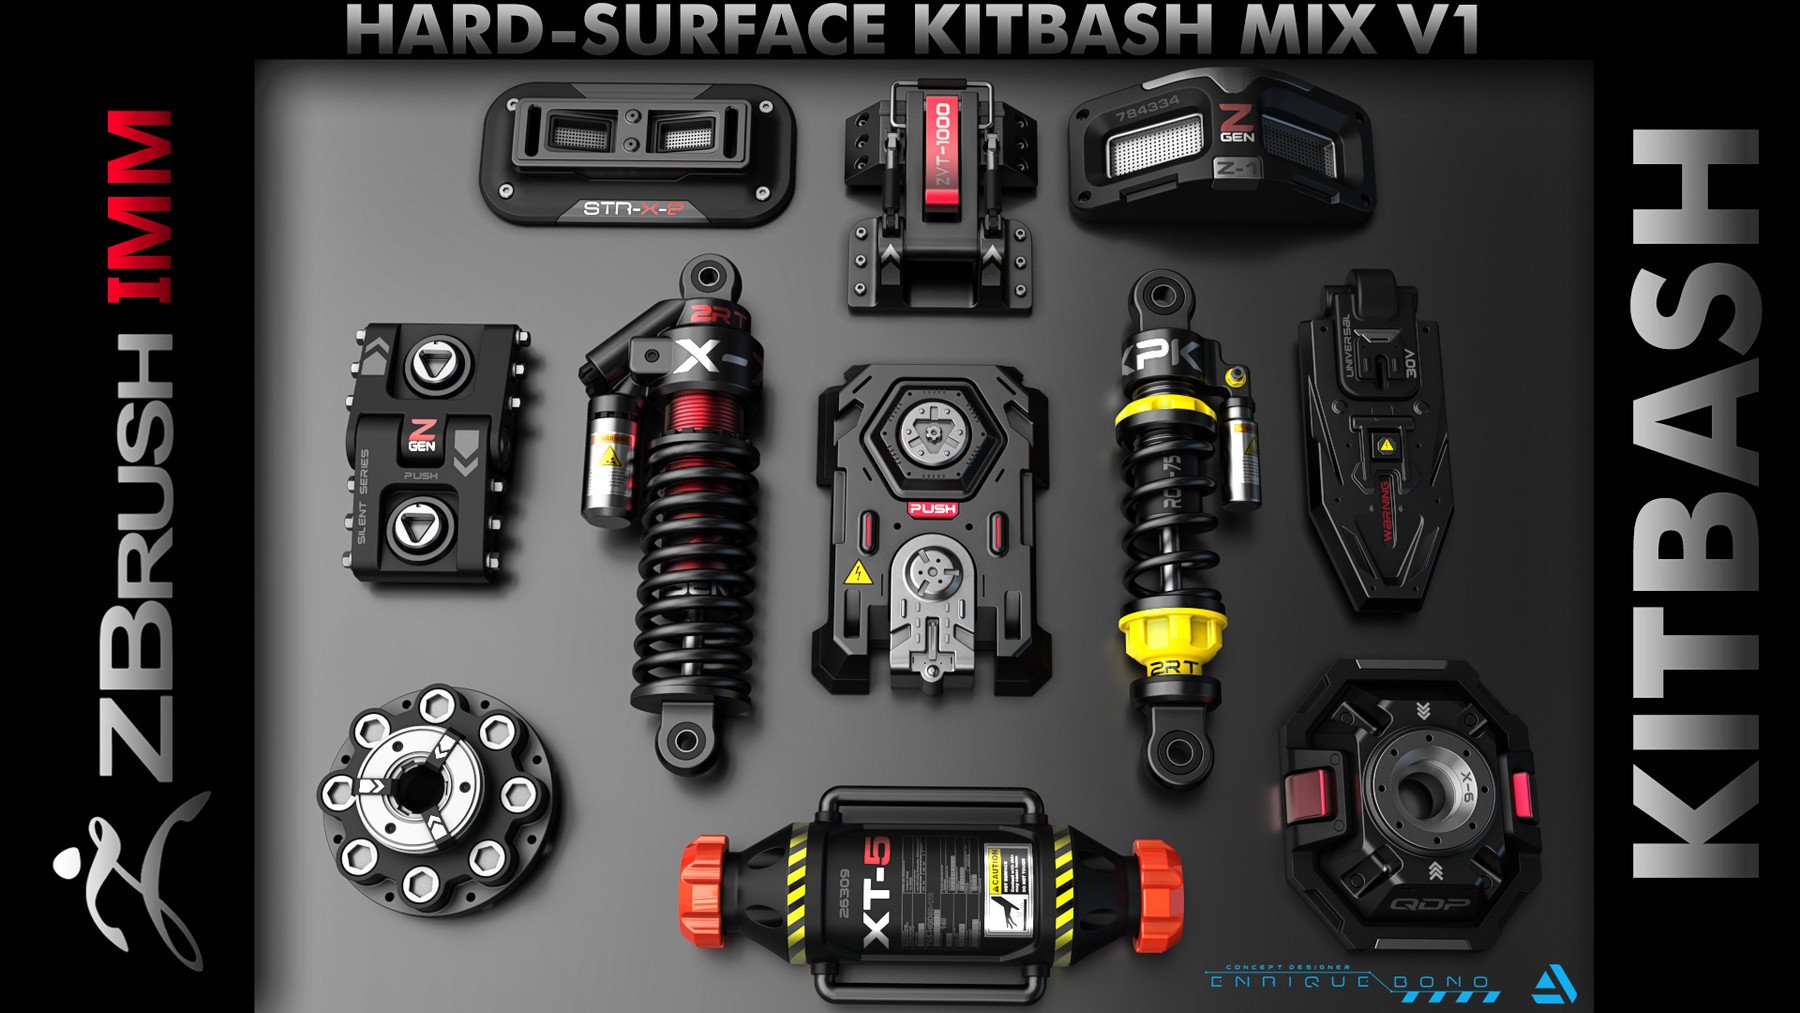 Kitbash Hard-Surface Mix V1